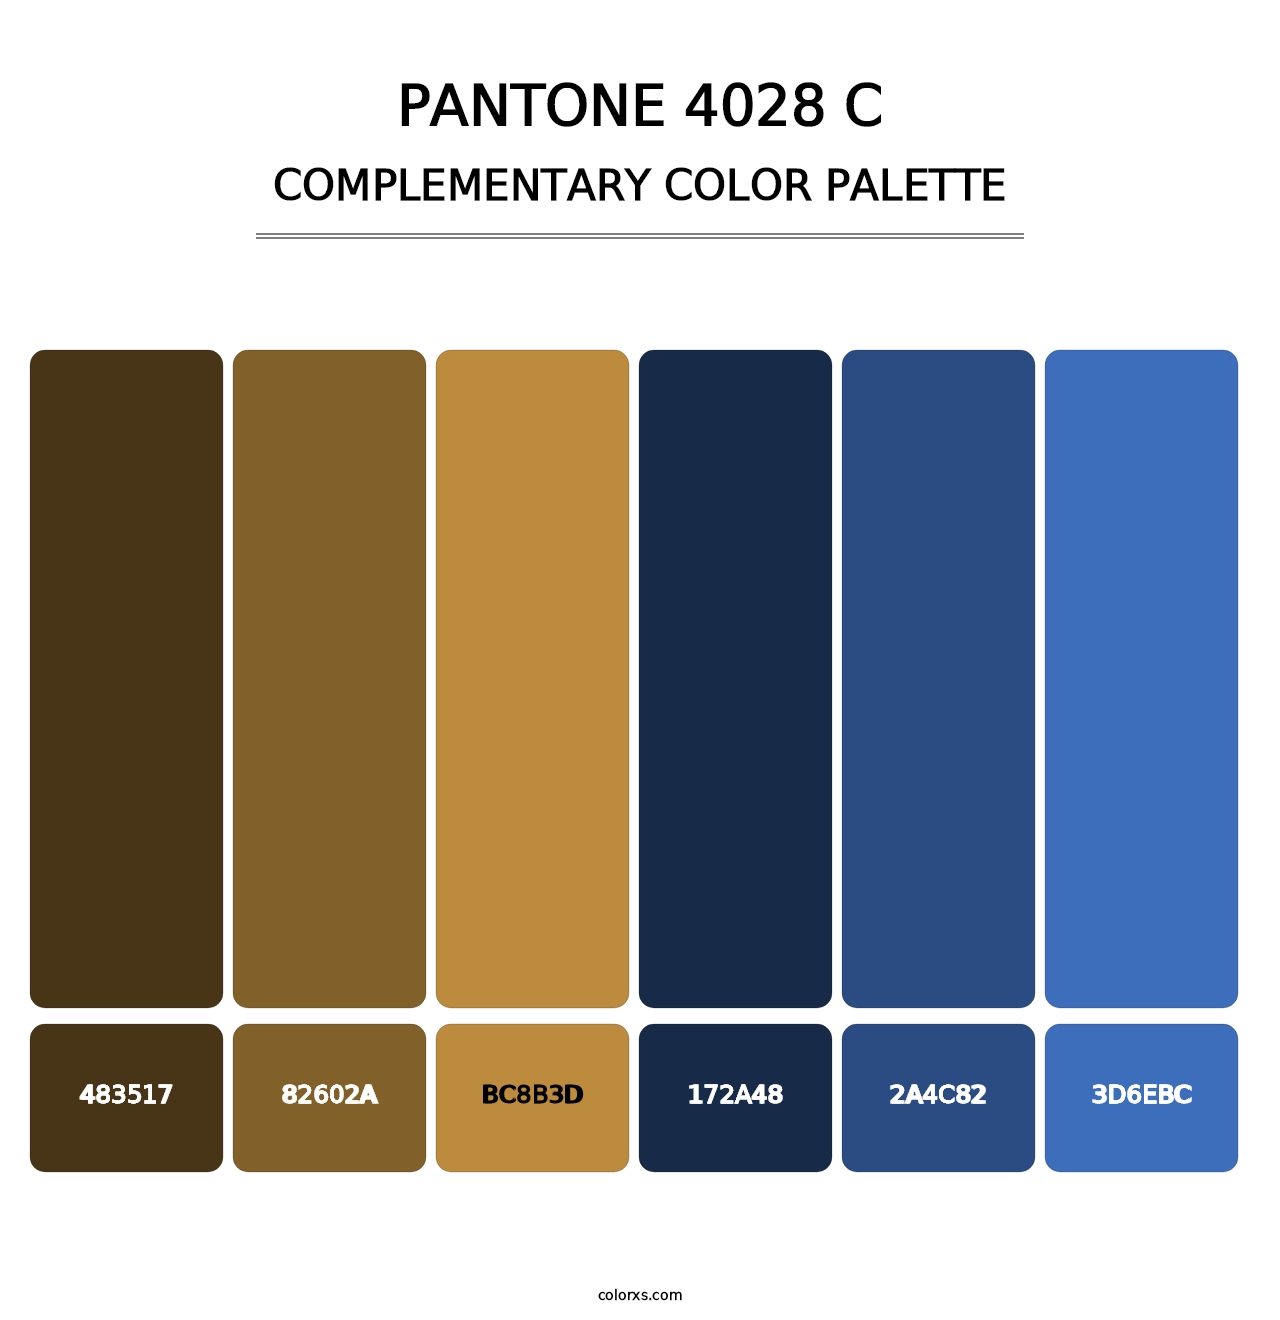 PANTONE 4028 C - Complementary Color Palette